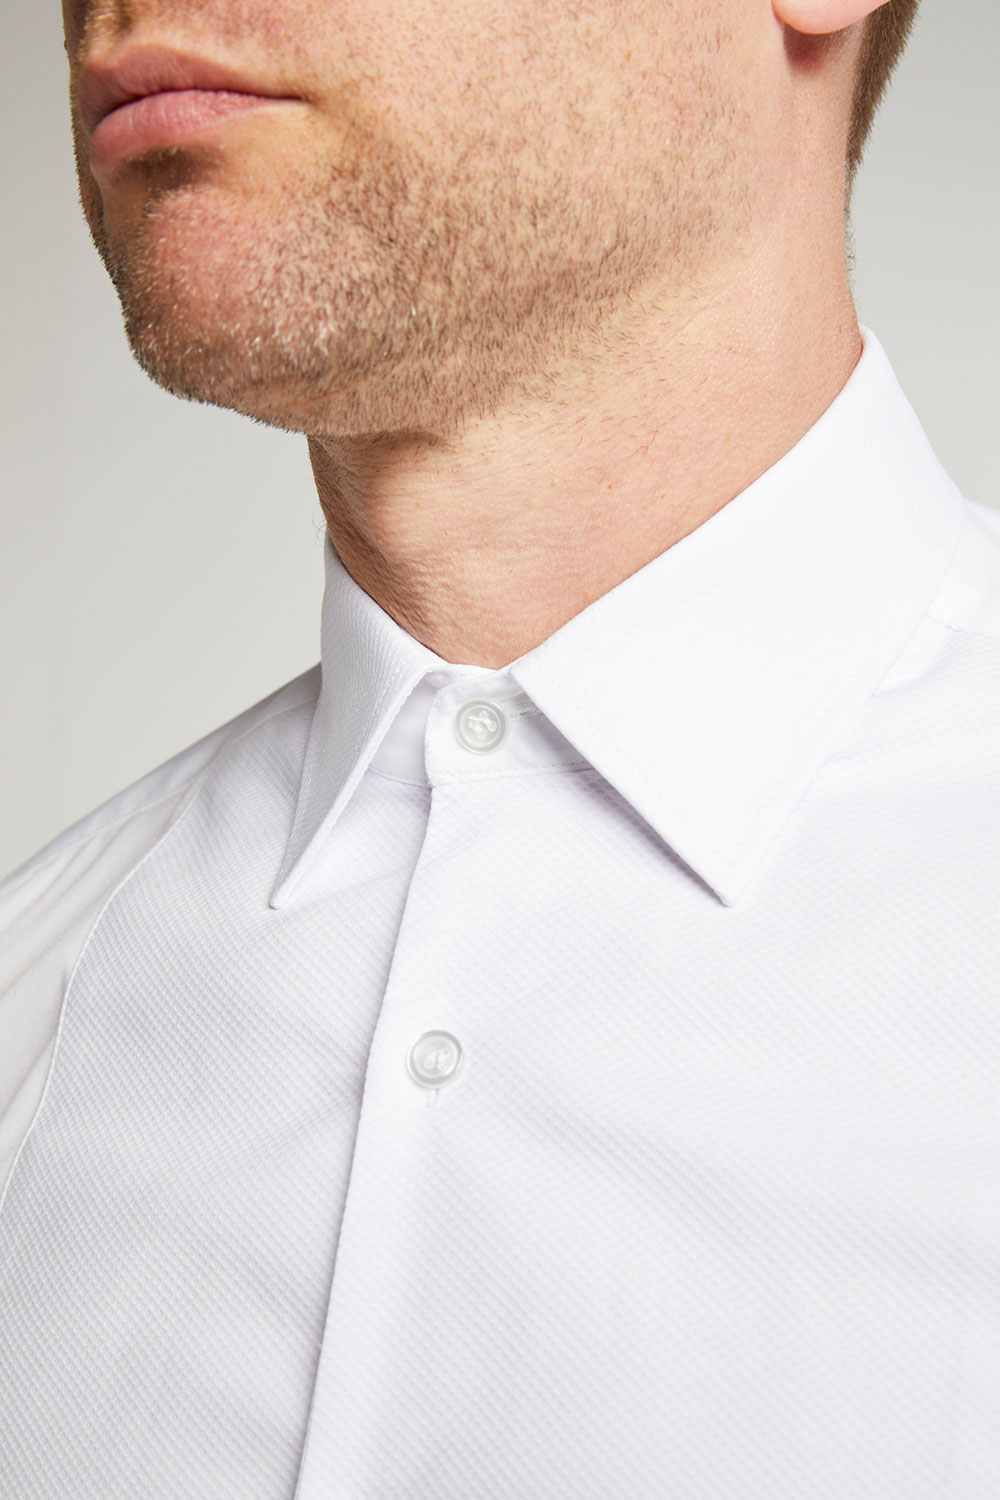 Men's Double TWO White Marcella Bib Front Dress Shirt | Sugdens ...